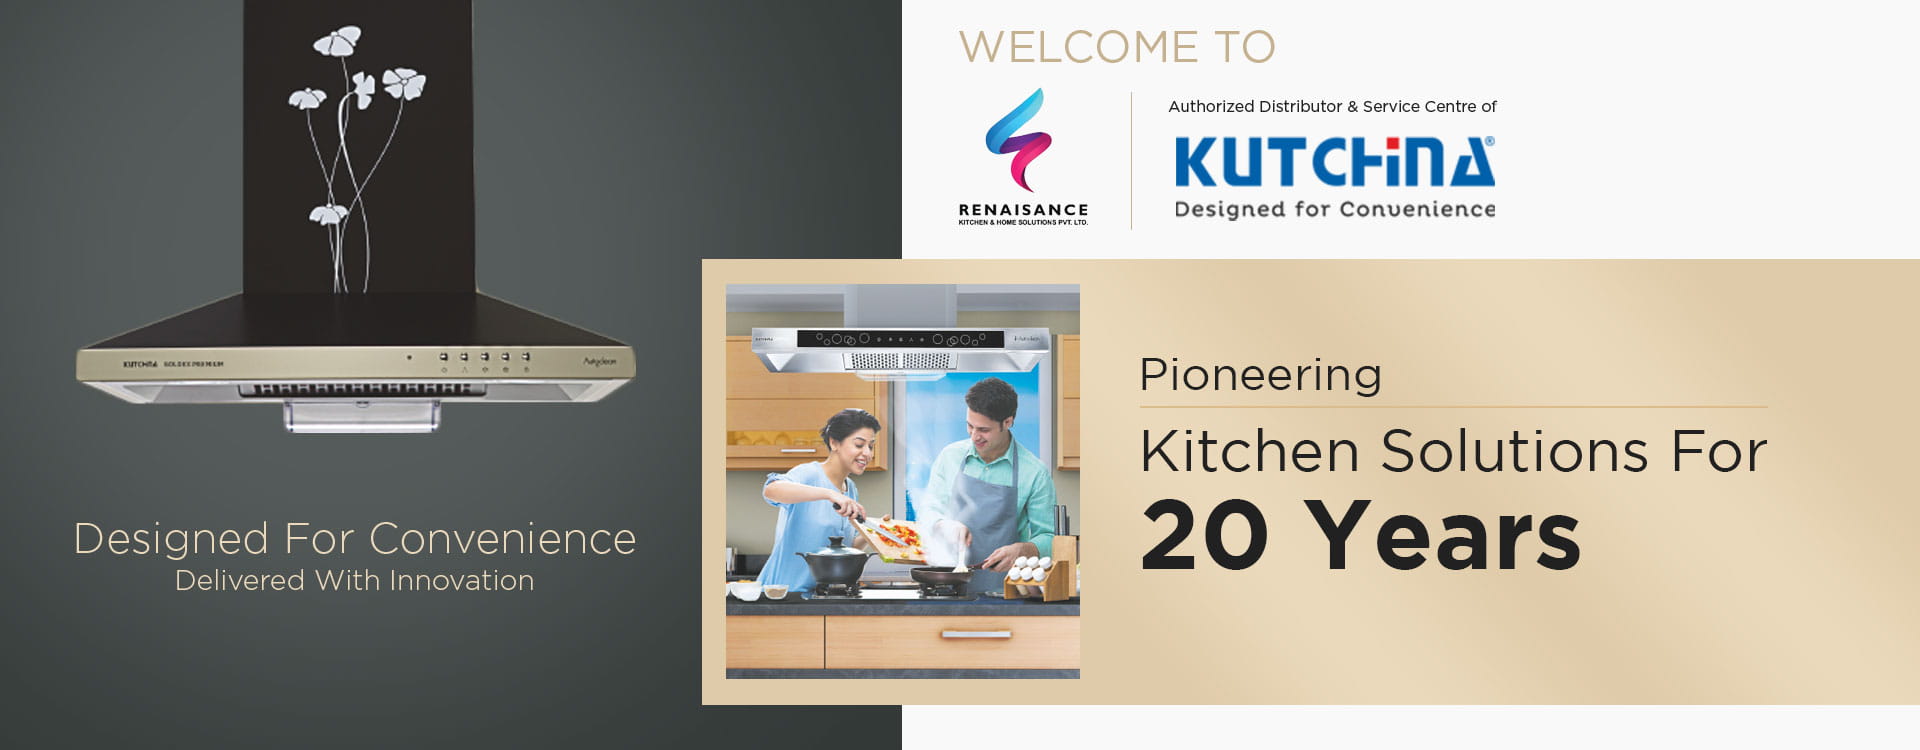 Renaisance Kitchen & Home Solutions Pvt. Ltd.